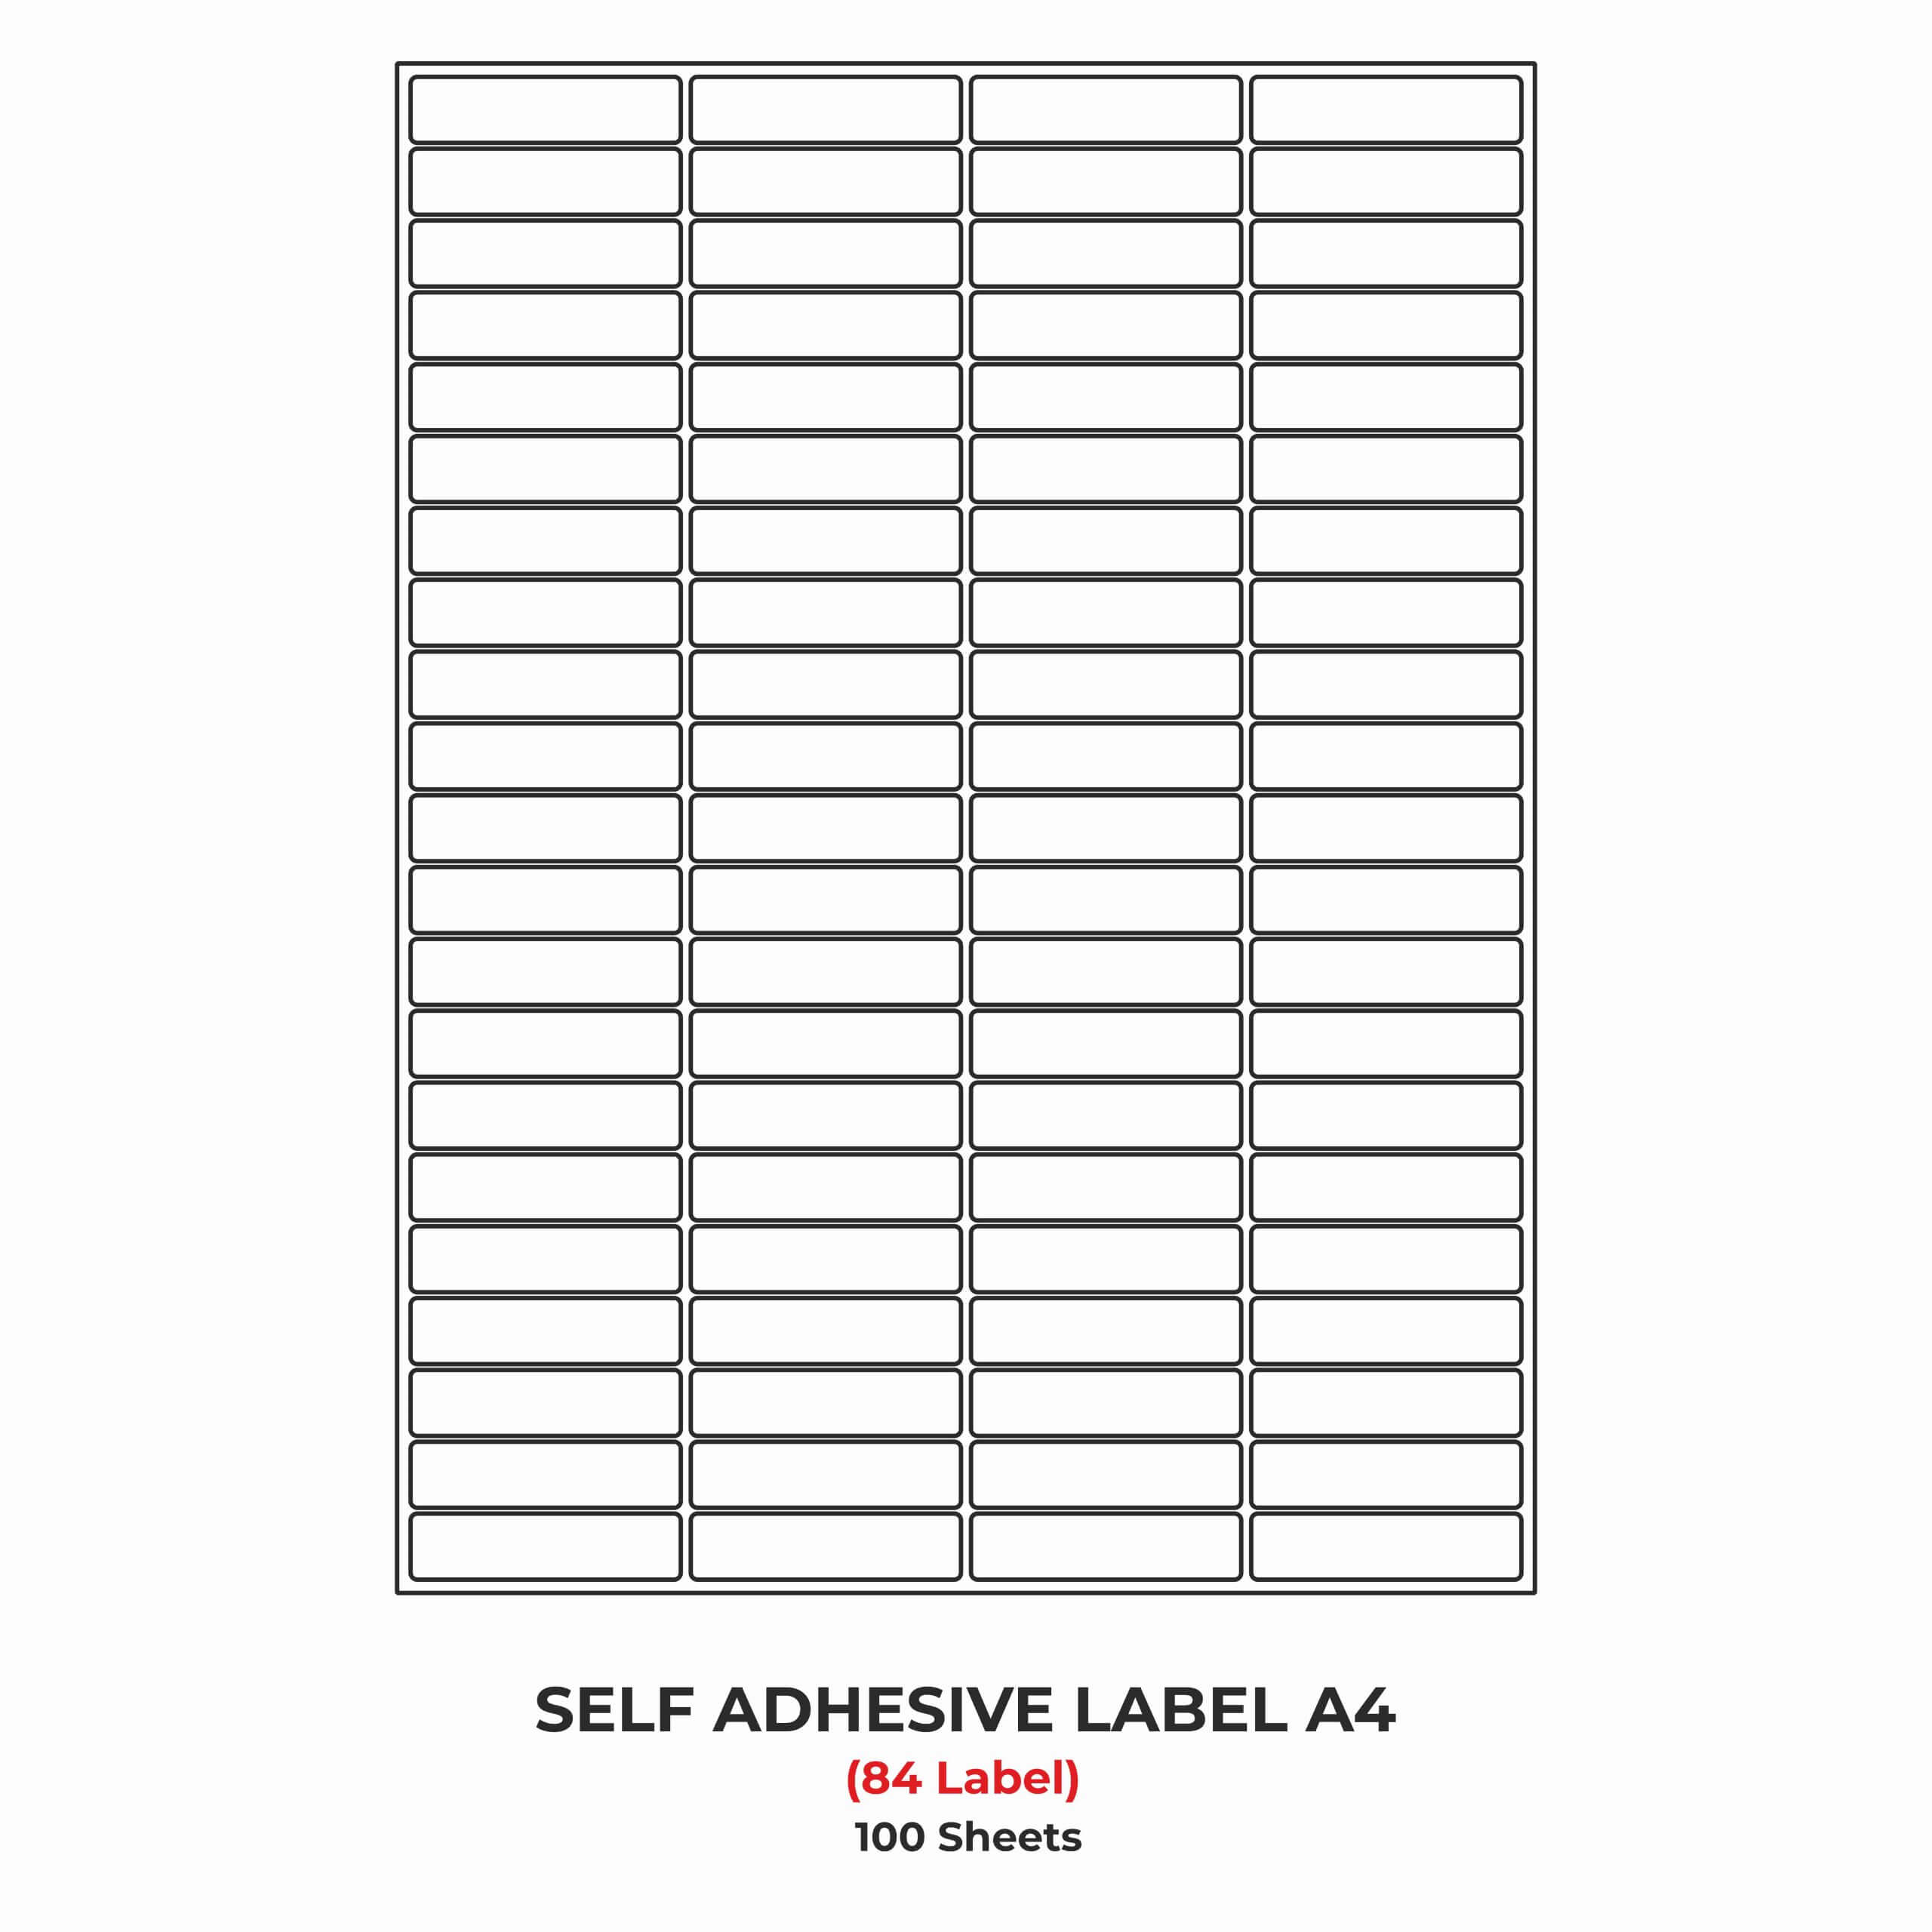 A4 (ST84) Address Label (9mm x 71mm x 84) (Self Adhesive Label for Inkjet/Copier/Laser Printer)